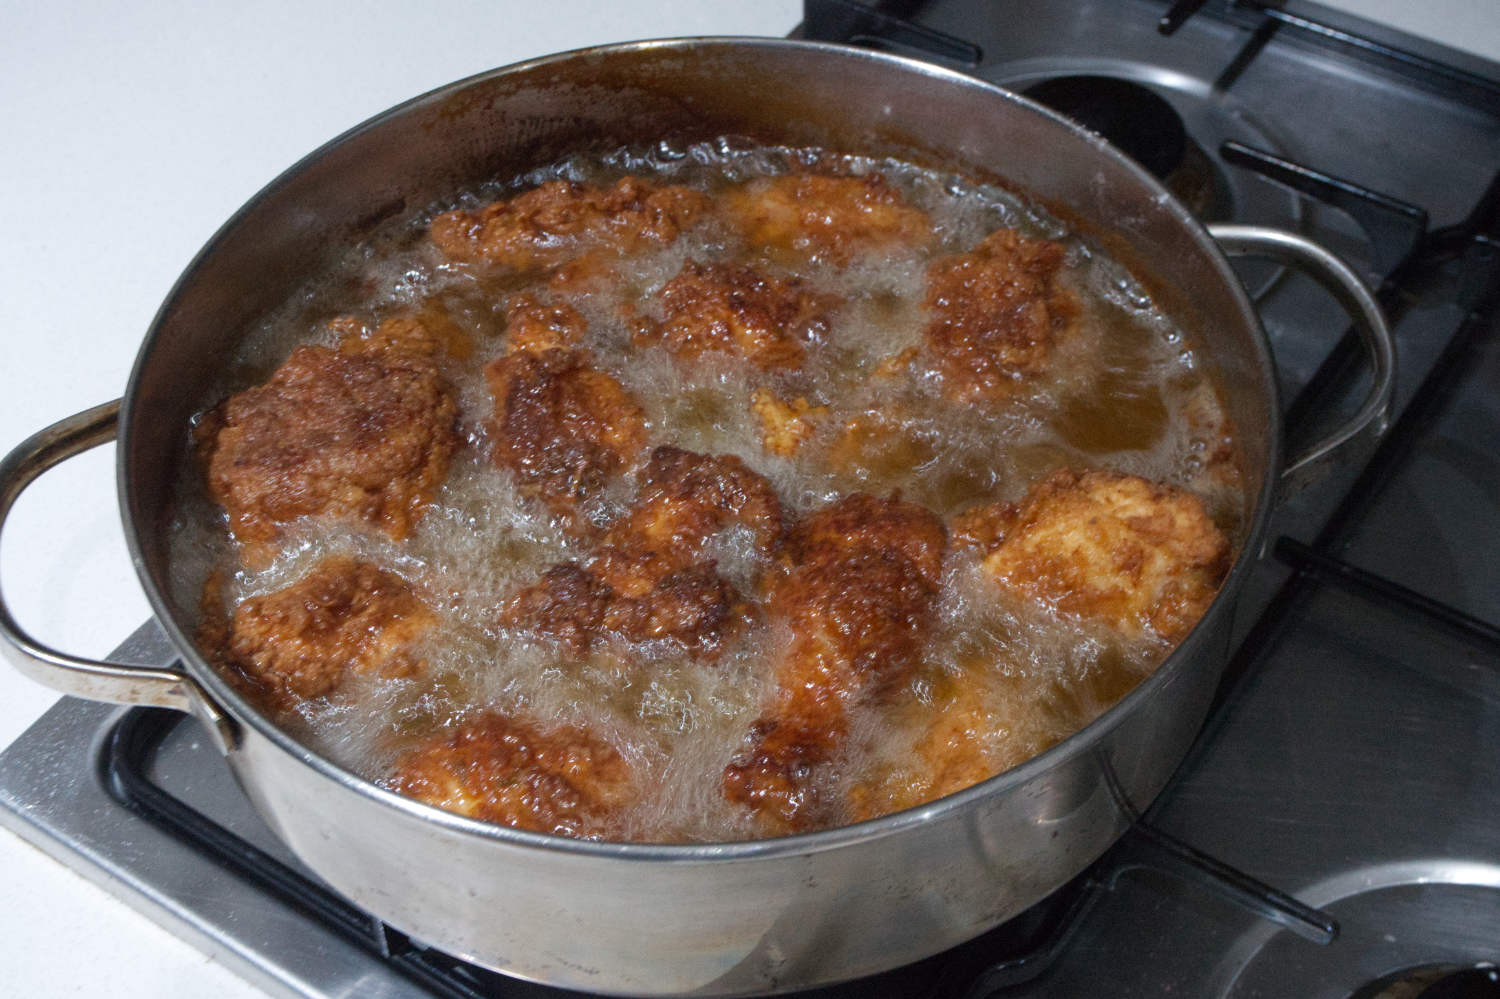 Frying the chicken until golden brown.